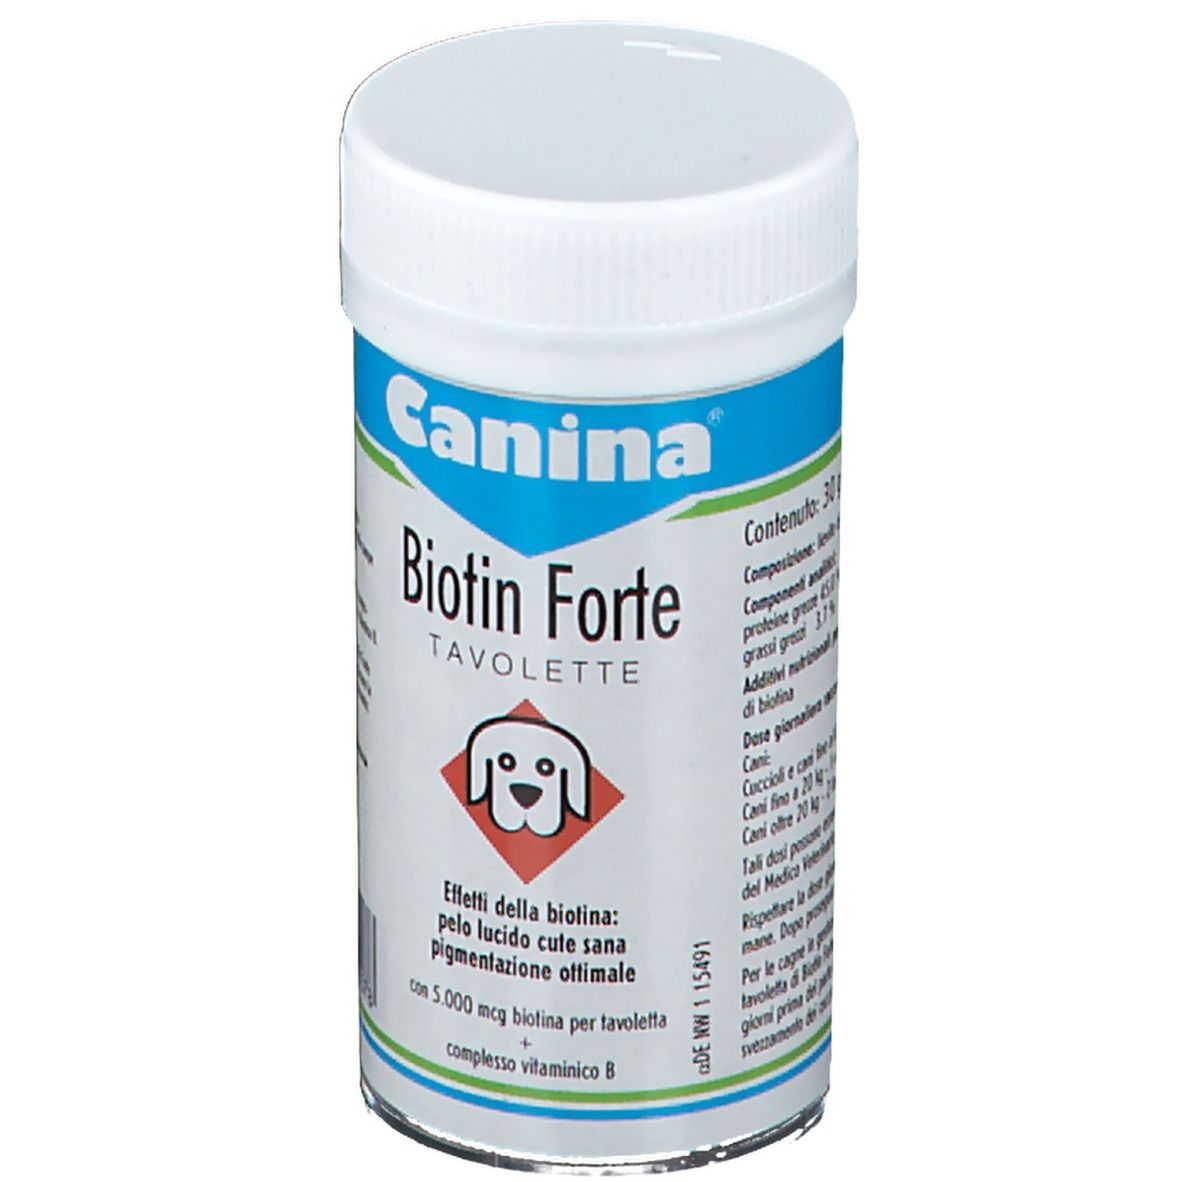 Canina® Biotin Forte Tavolette